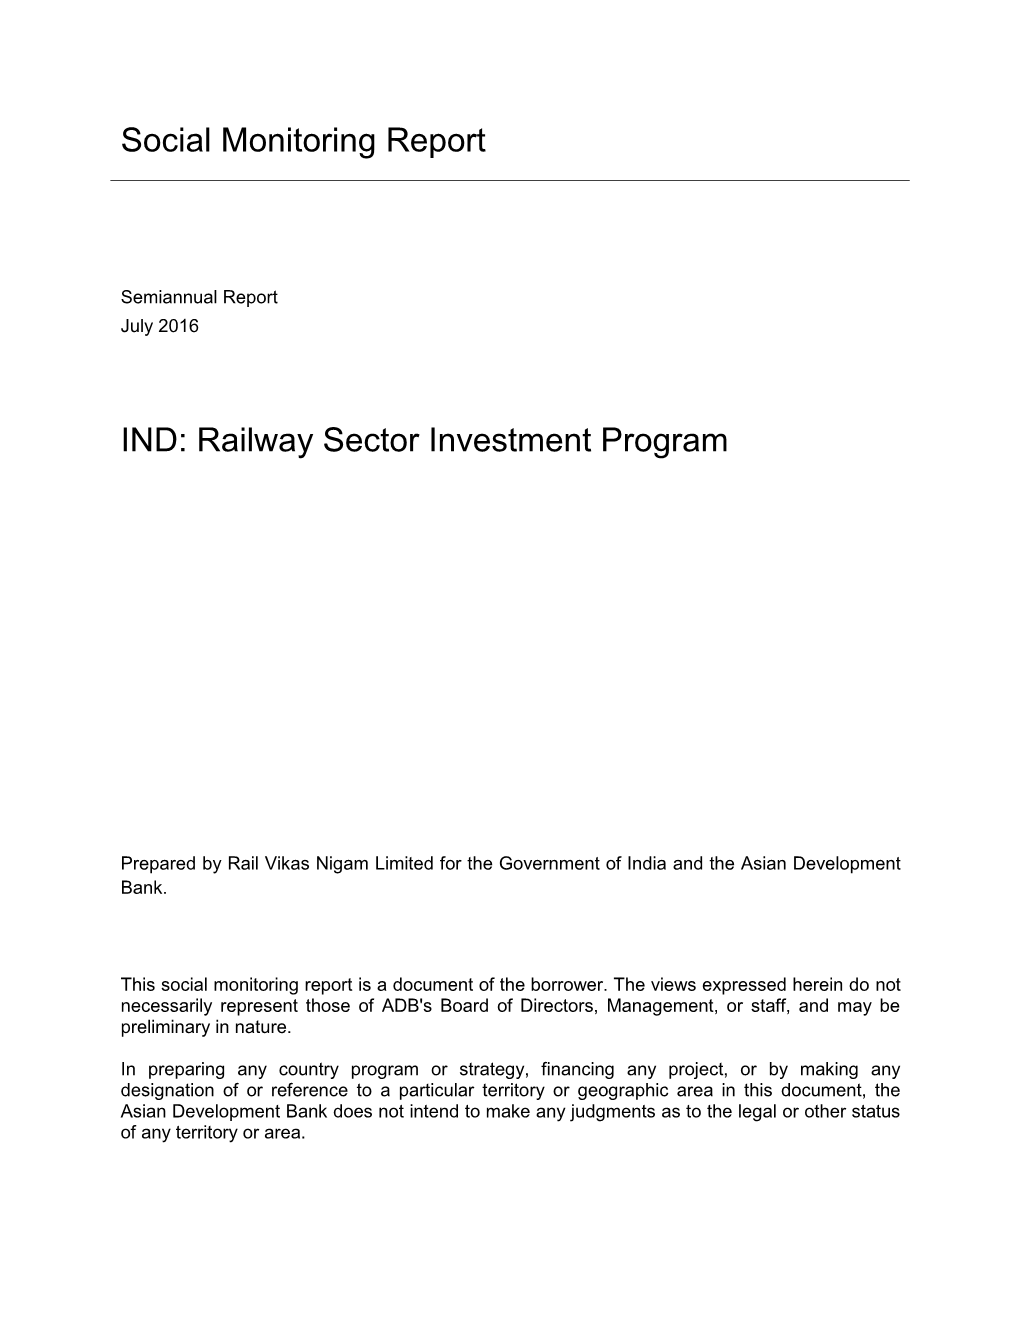 MFF Railway Sector Investment Program